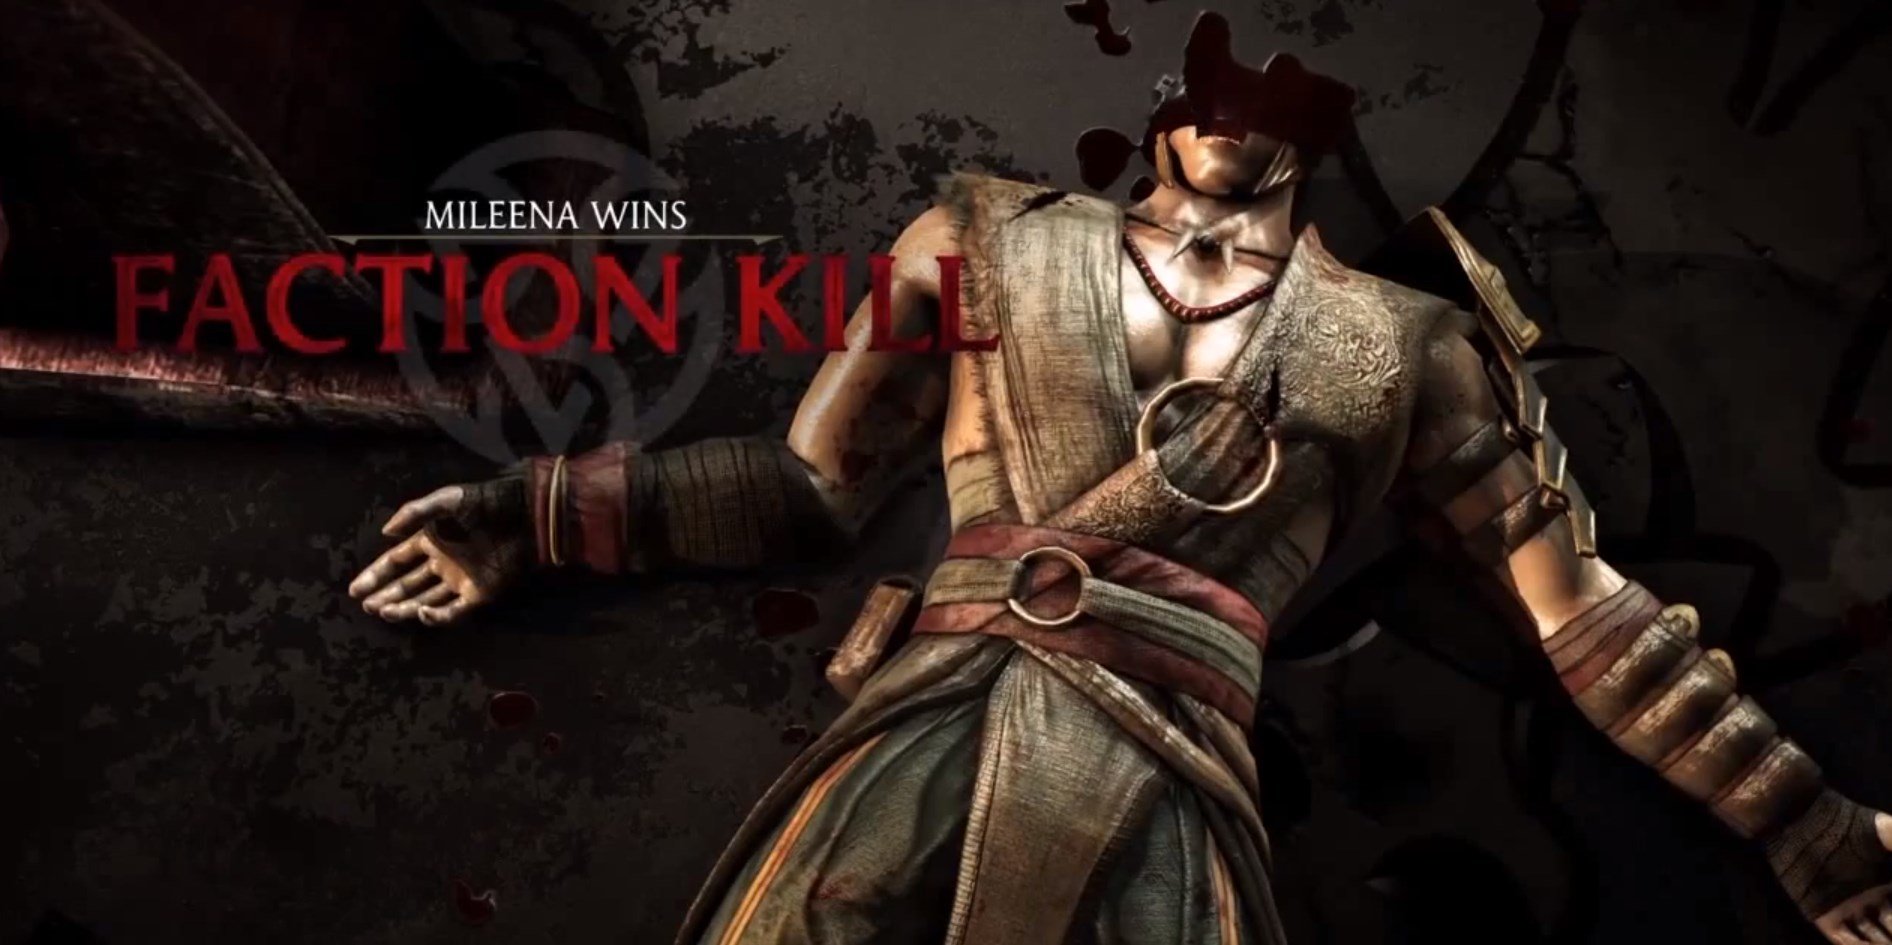 Análise: Mortal Kombat X (Multi) traz os kombates para a nova geração -  GameBlast